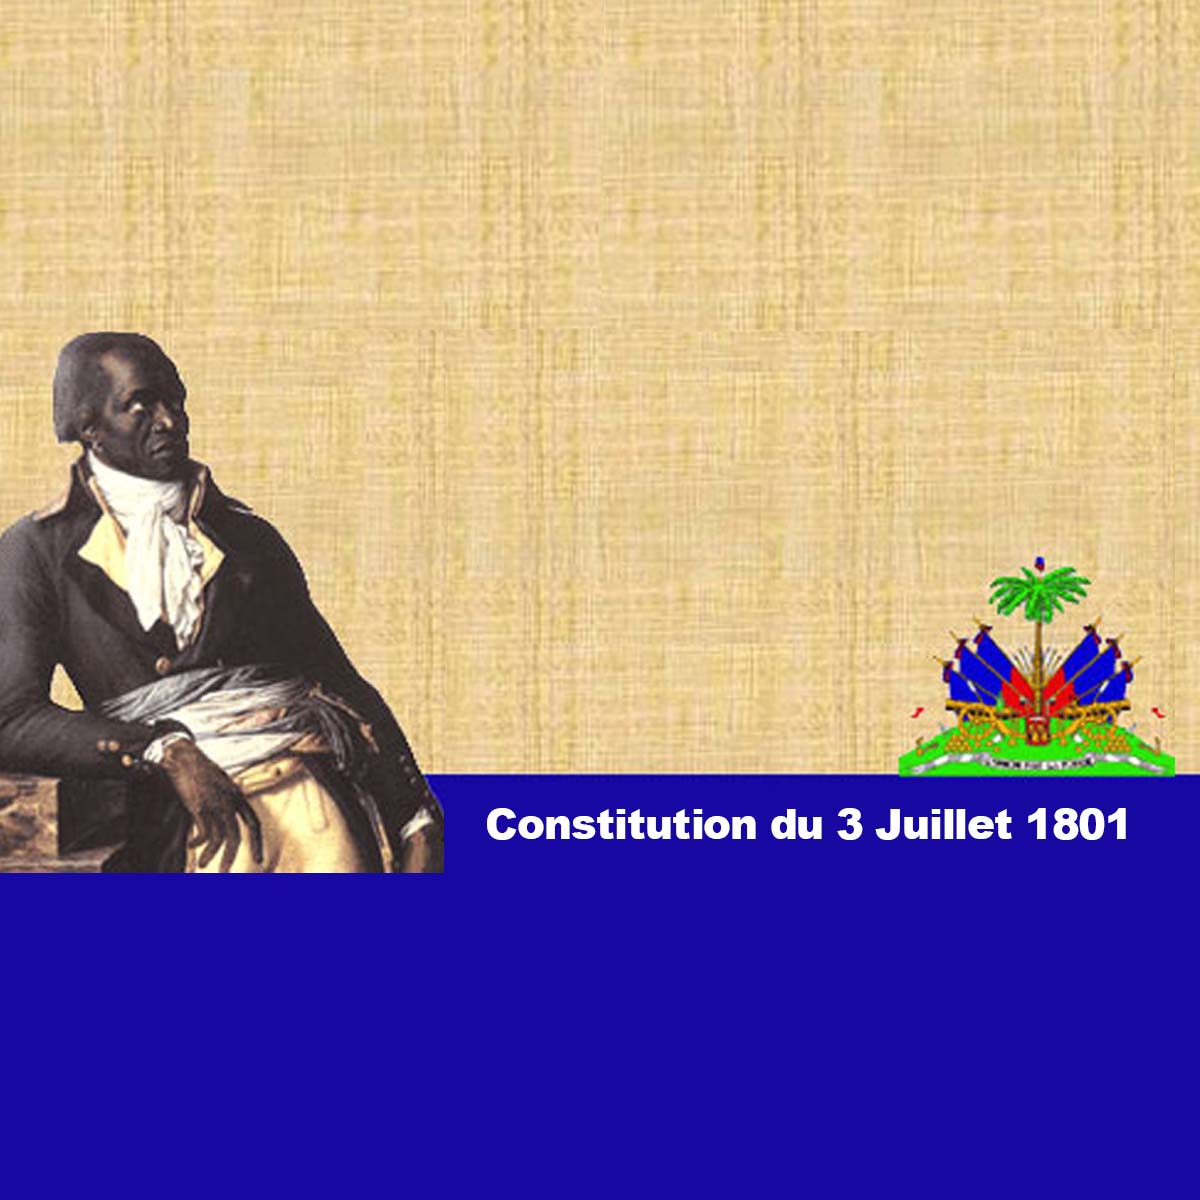 Le voyage de la Constitution de 1801.